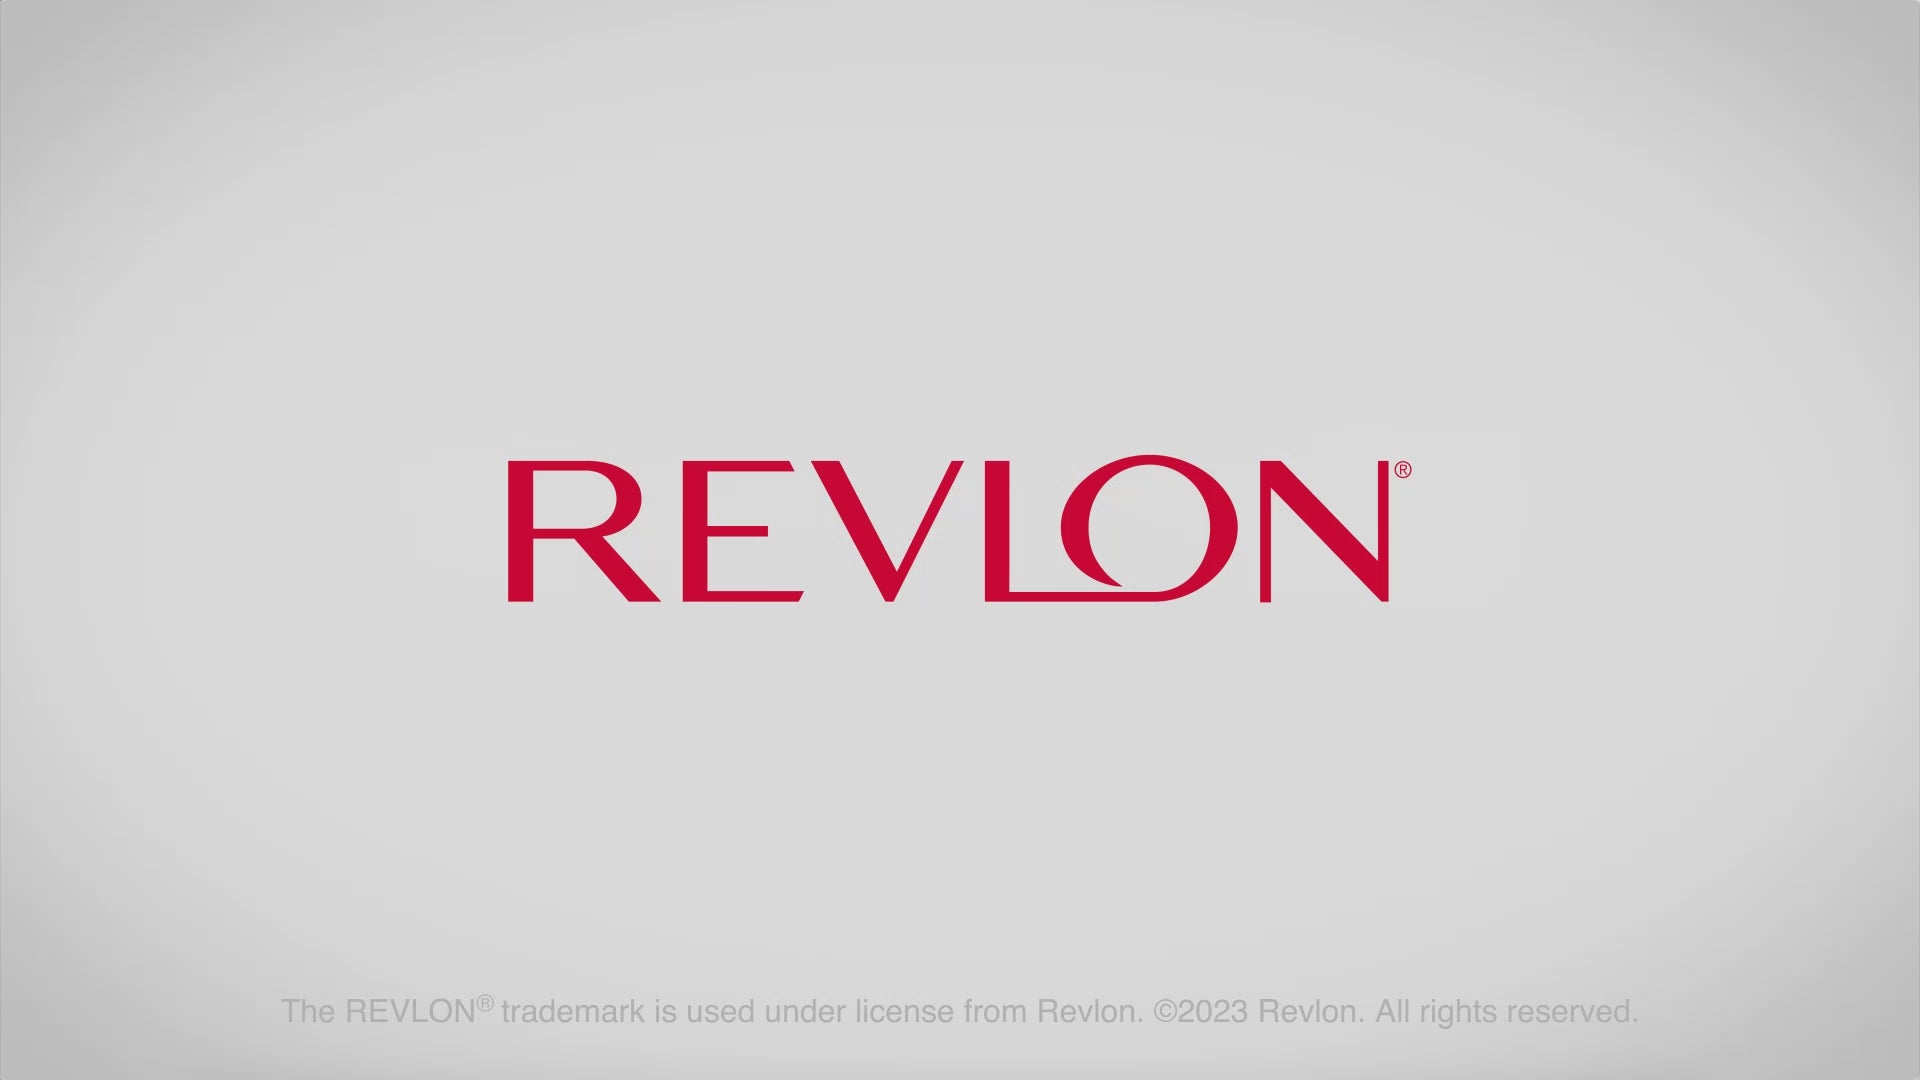 How to Pronounce Revlon (Makeup Brand) - YouTube